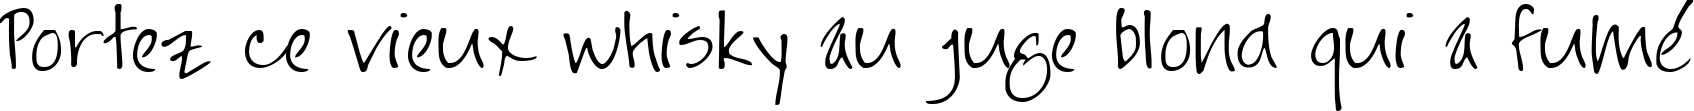 Пример написания шрифтом Jayne Print Hand текста на французском